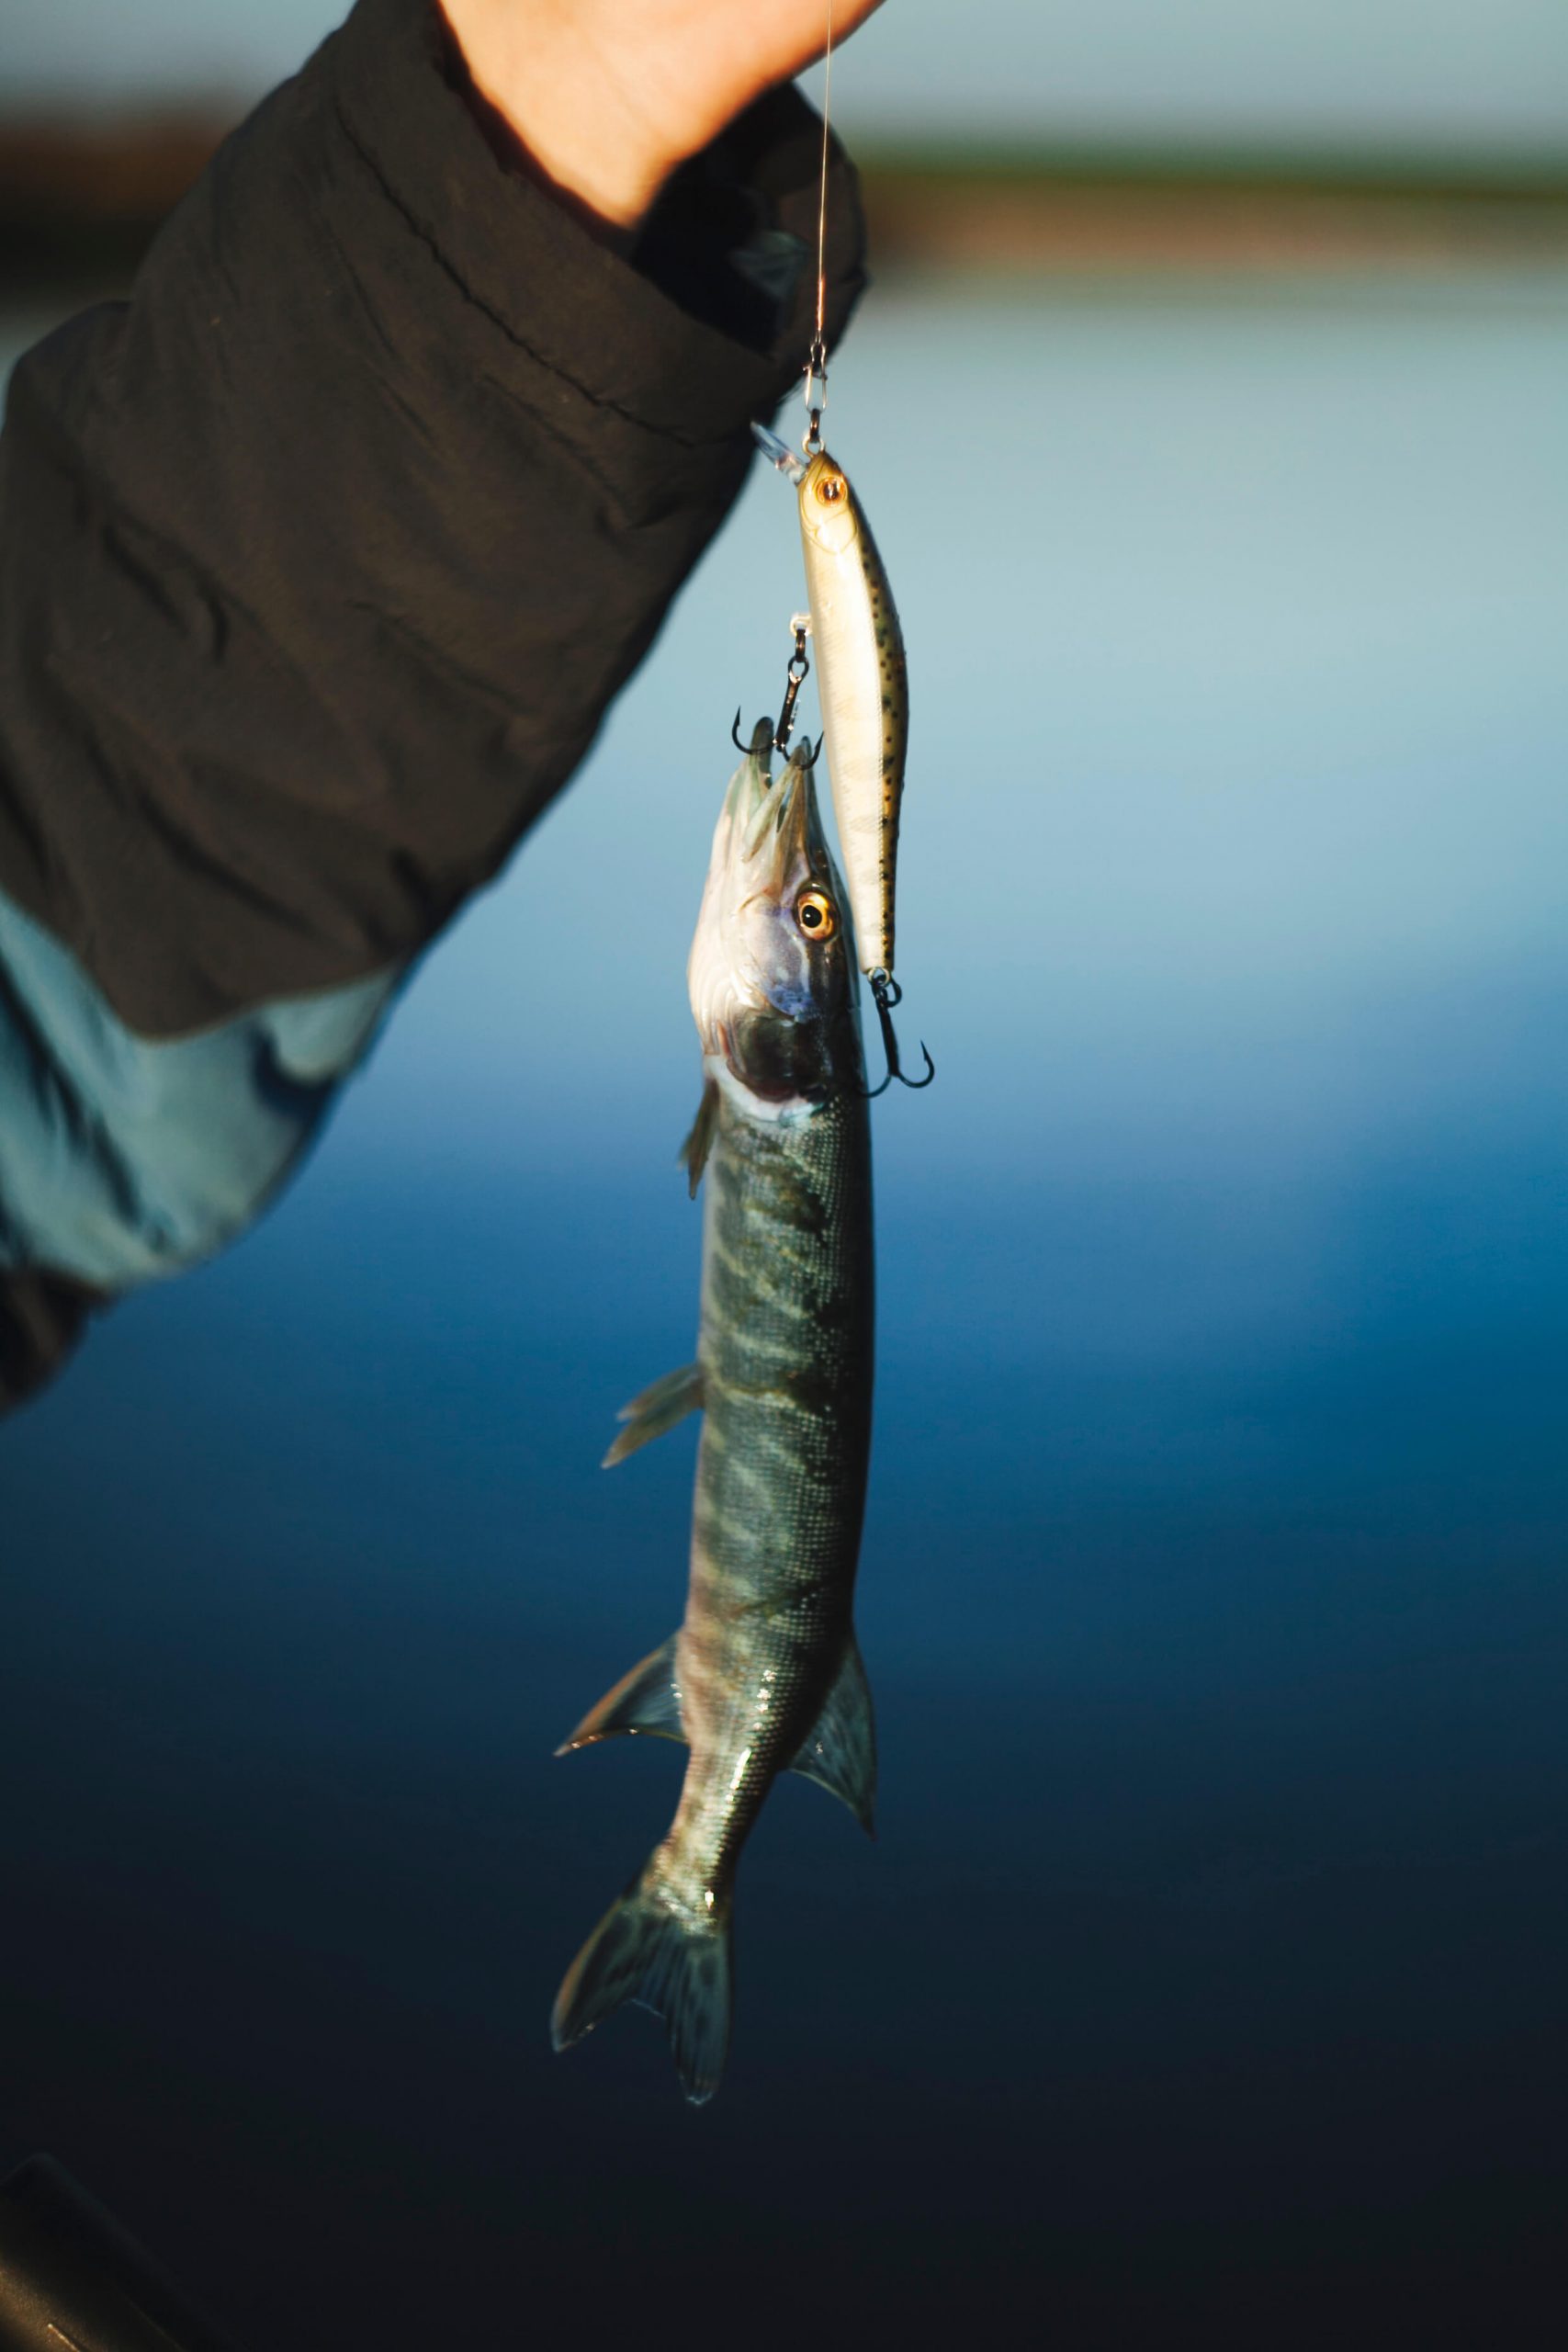 Pike Fishing Guide To Help You Catch Fish - NorfolkFishingBlog